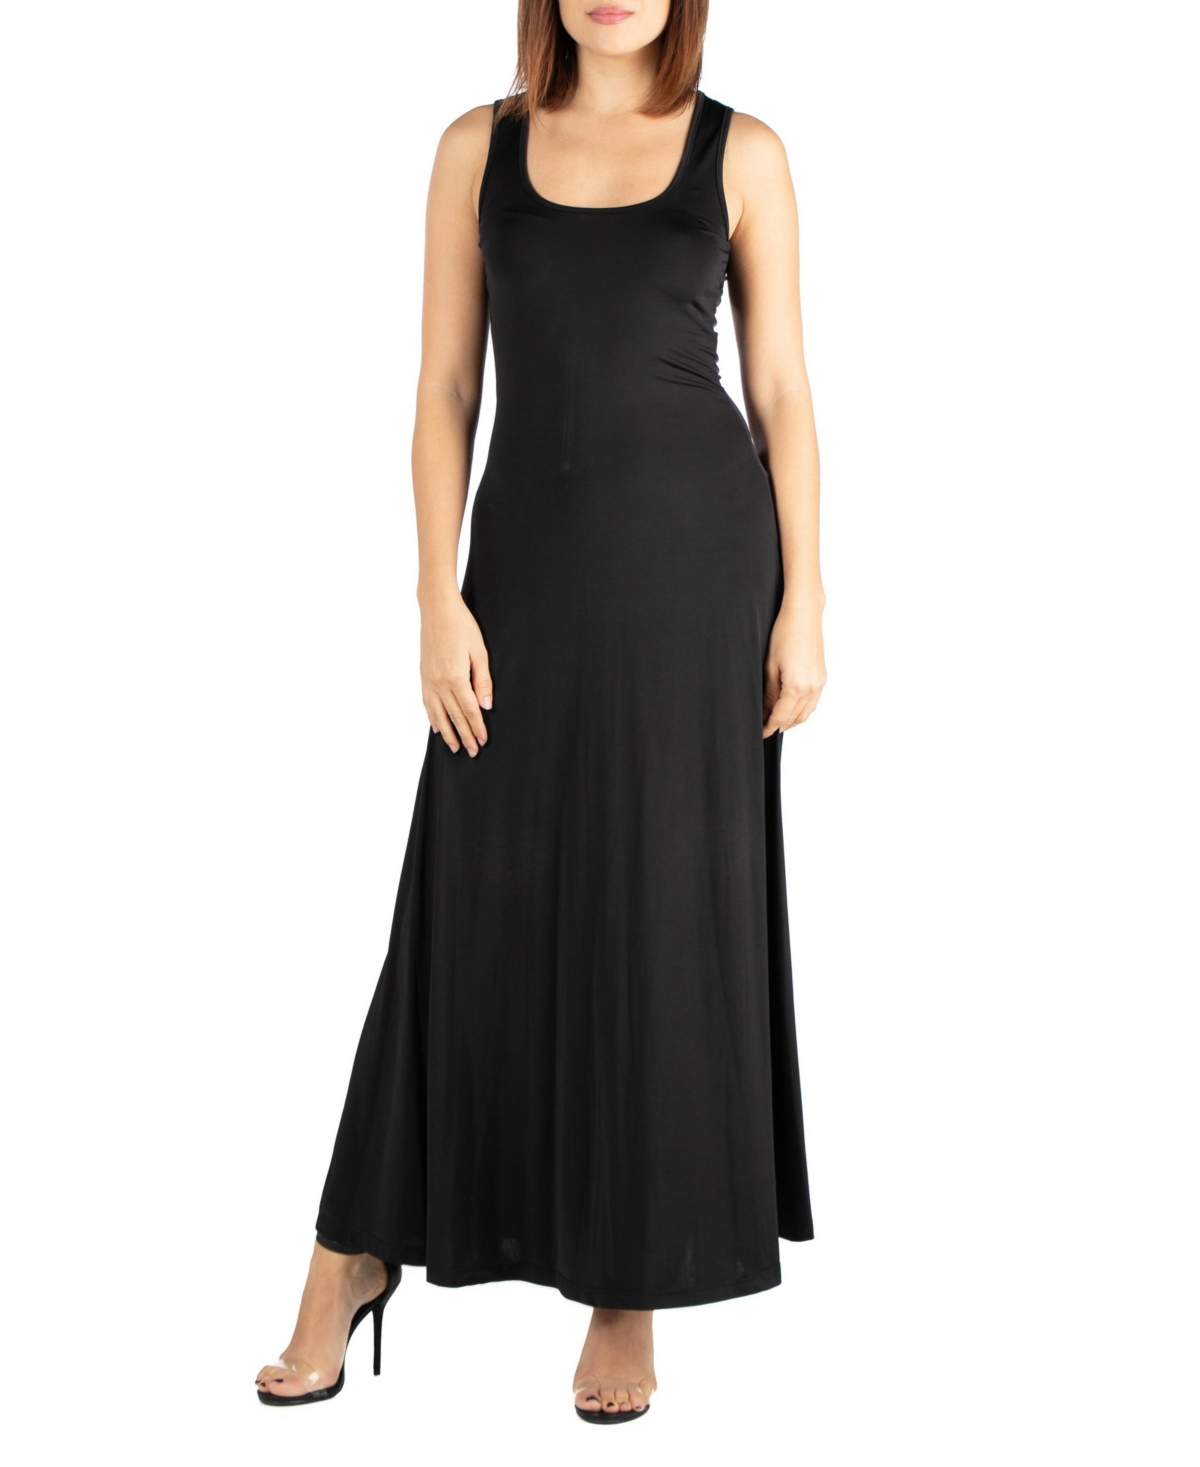 Women's Slim Fit A-Line Sleeveless Maxi Dress - Black